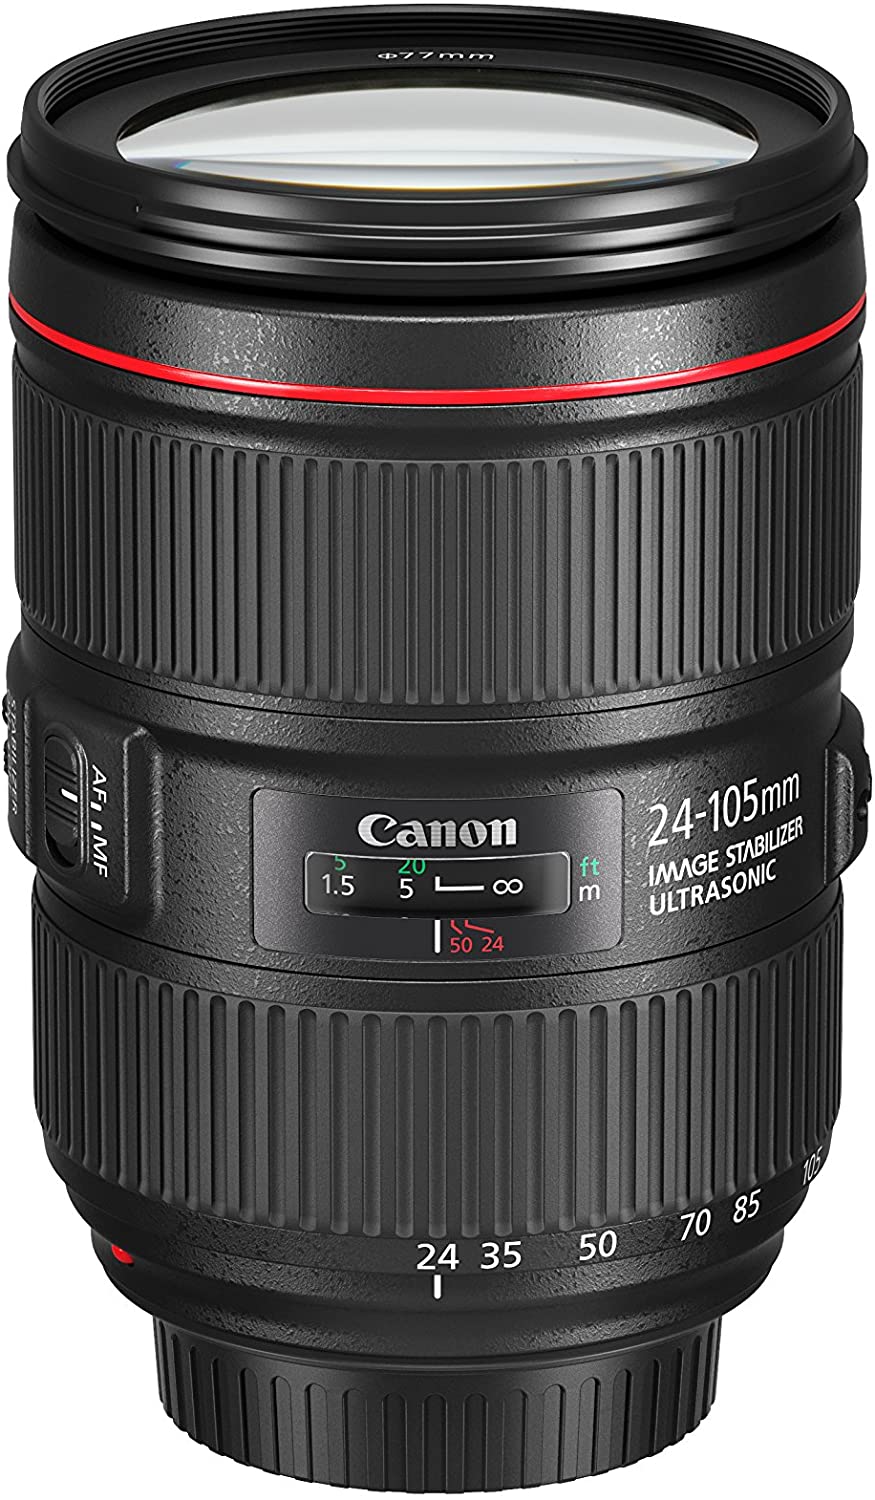 Canon EF 24-105mm f/4L IS II Mark 2 USM Lens